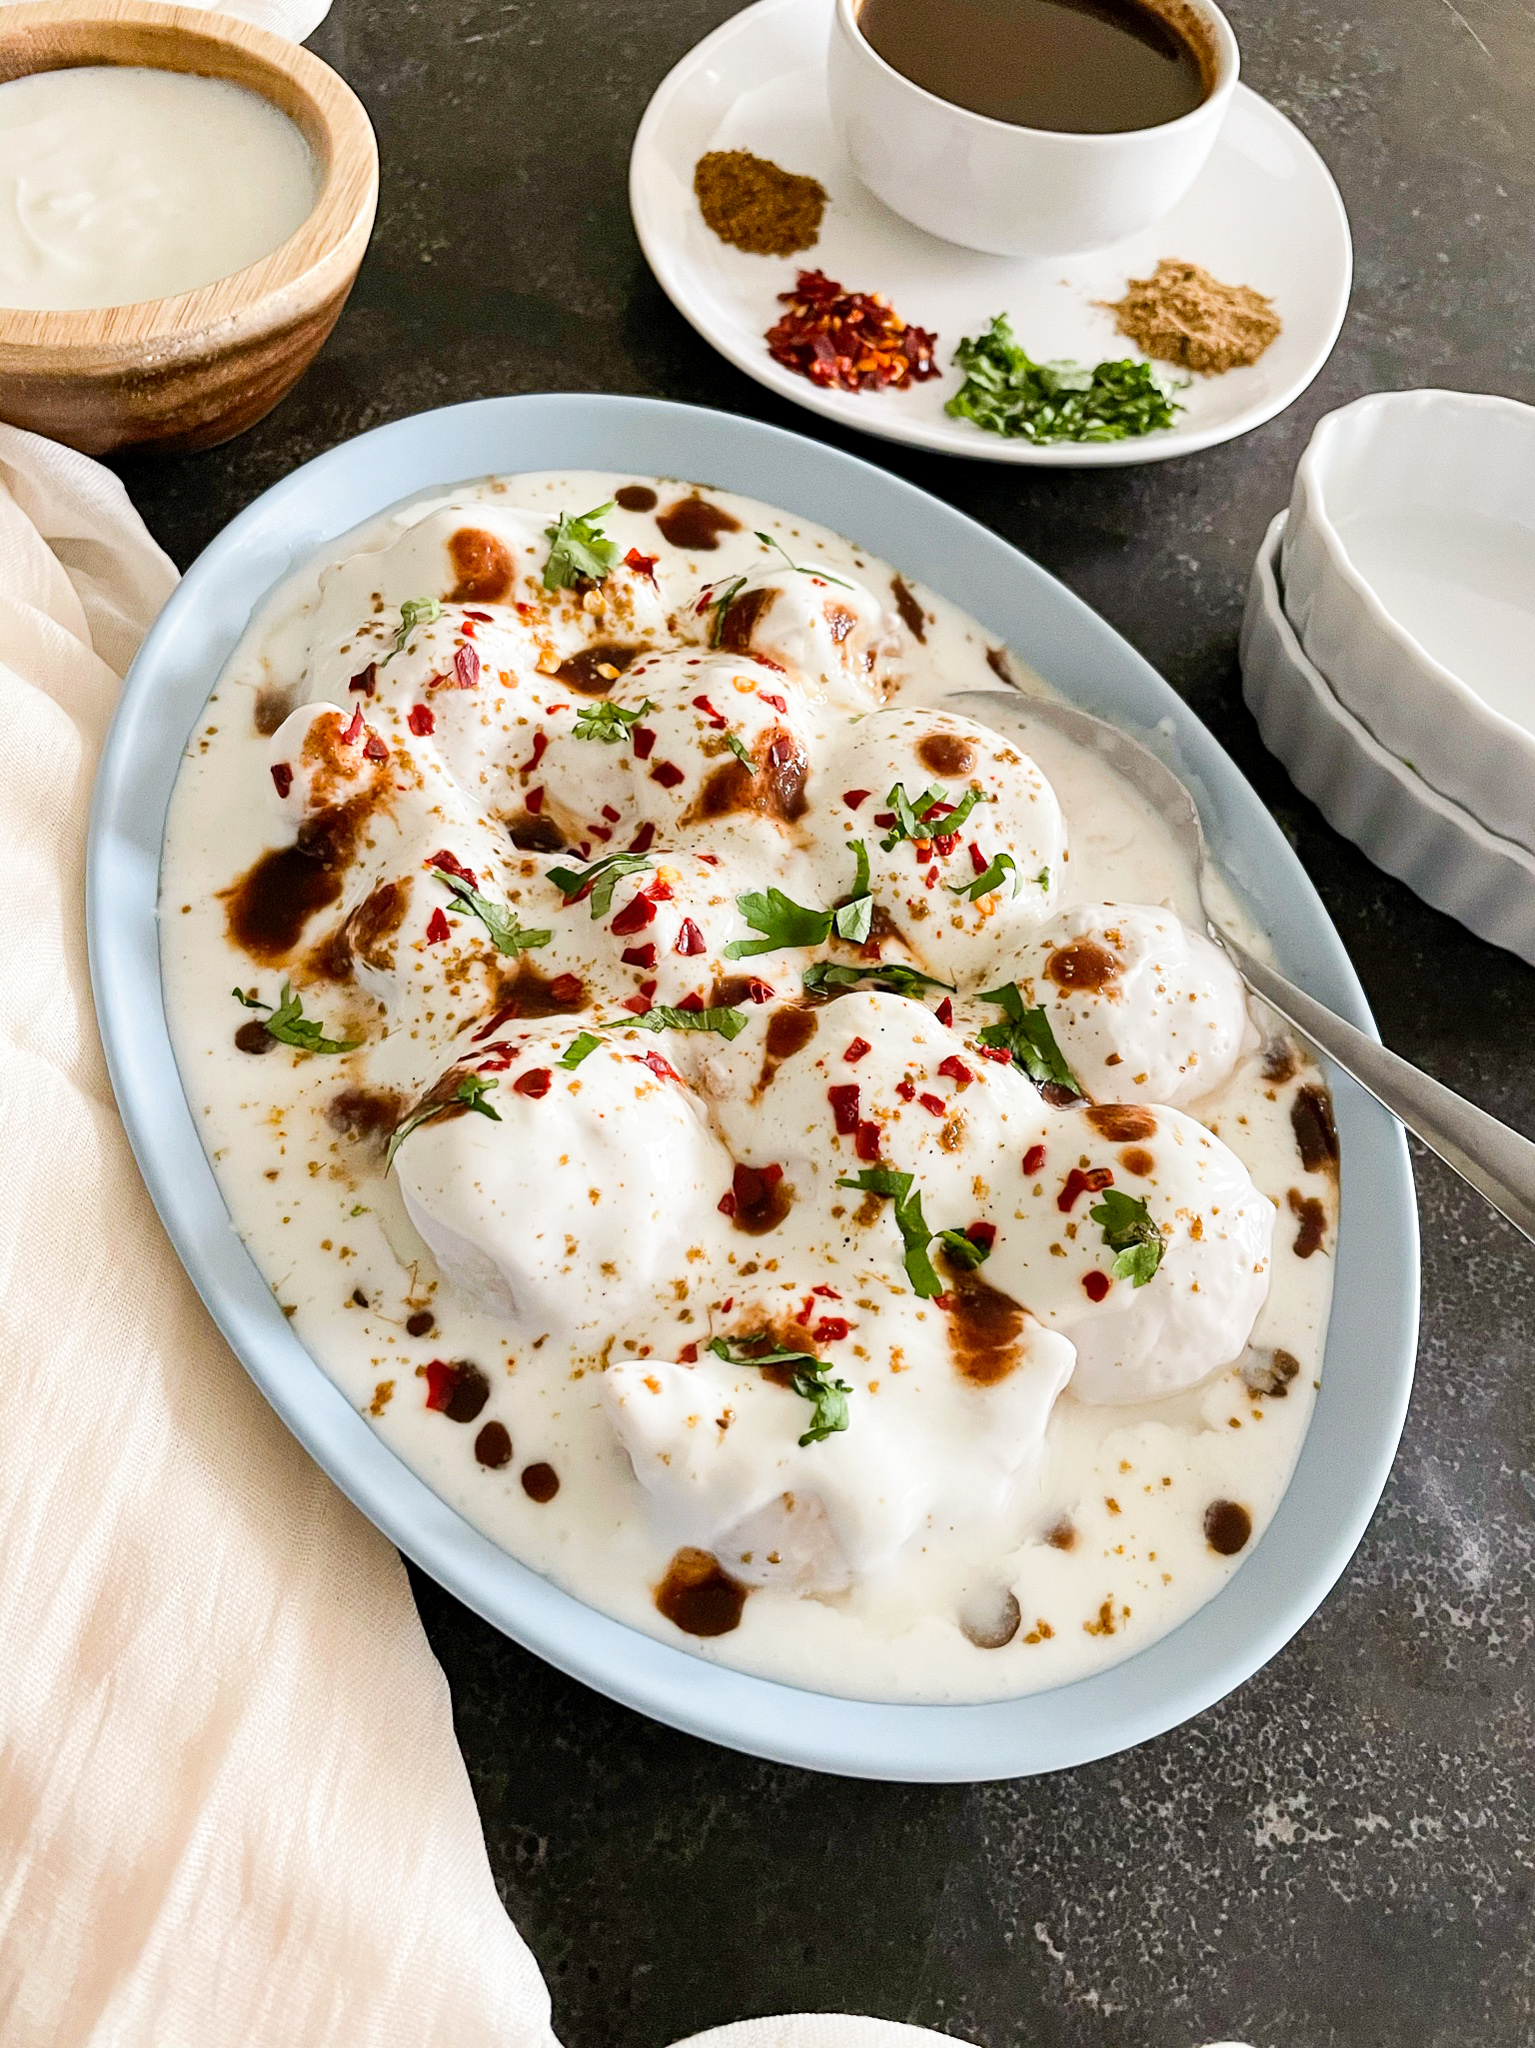 Dahi Vada Lentil Fritters In Yogurt The Spice Mess